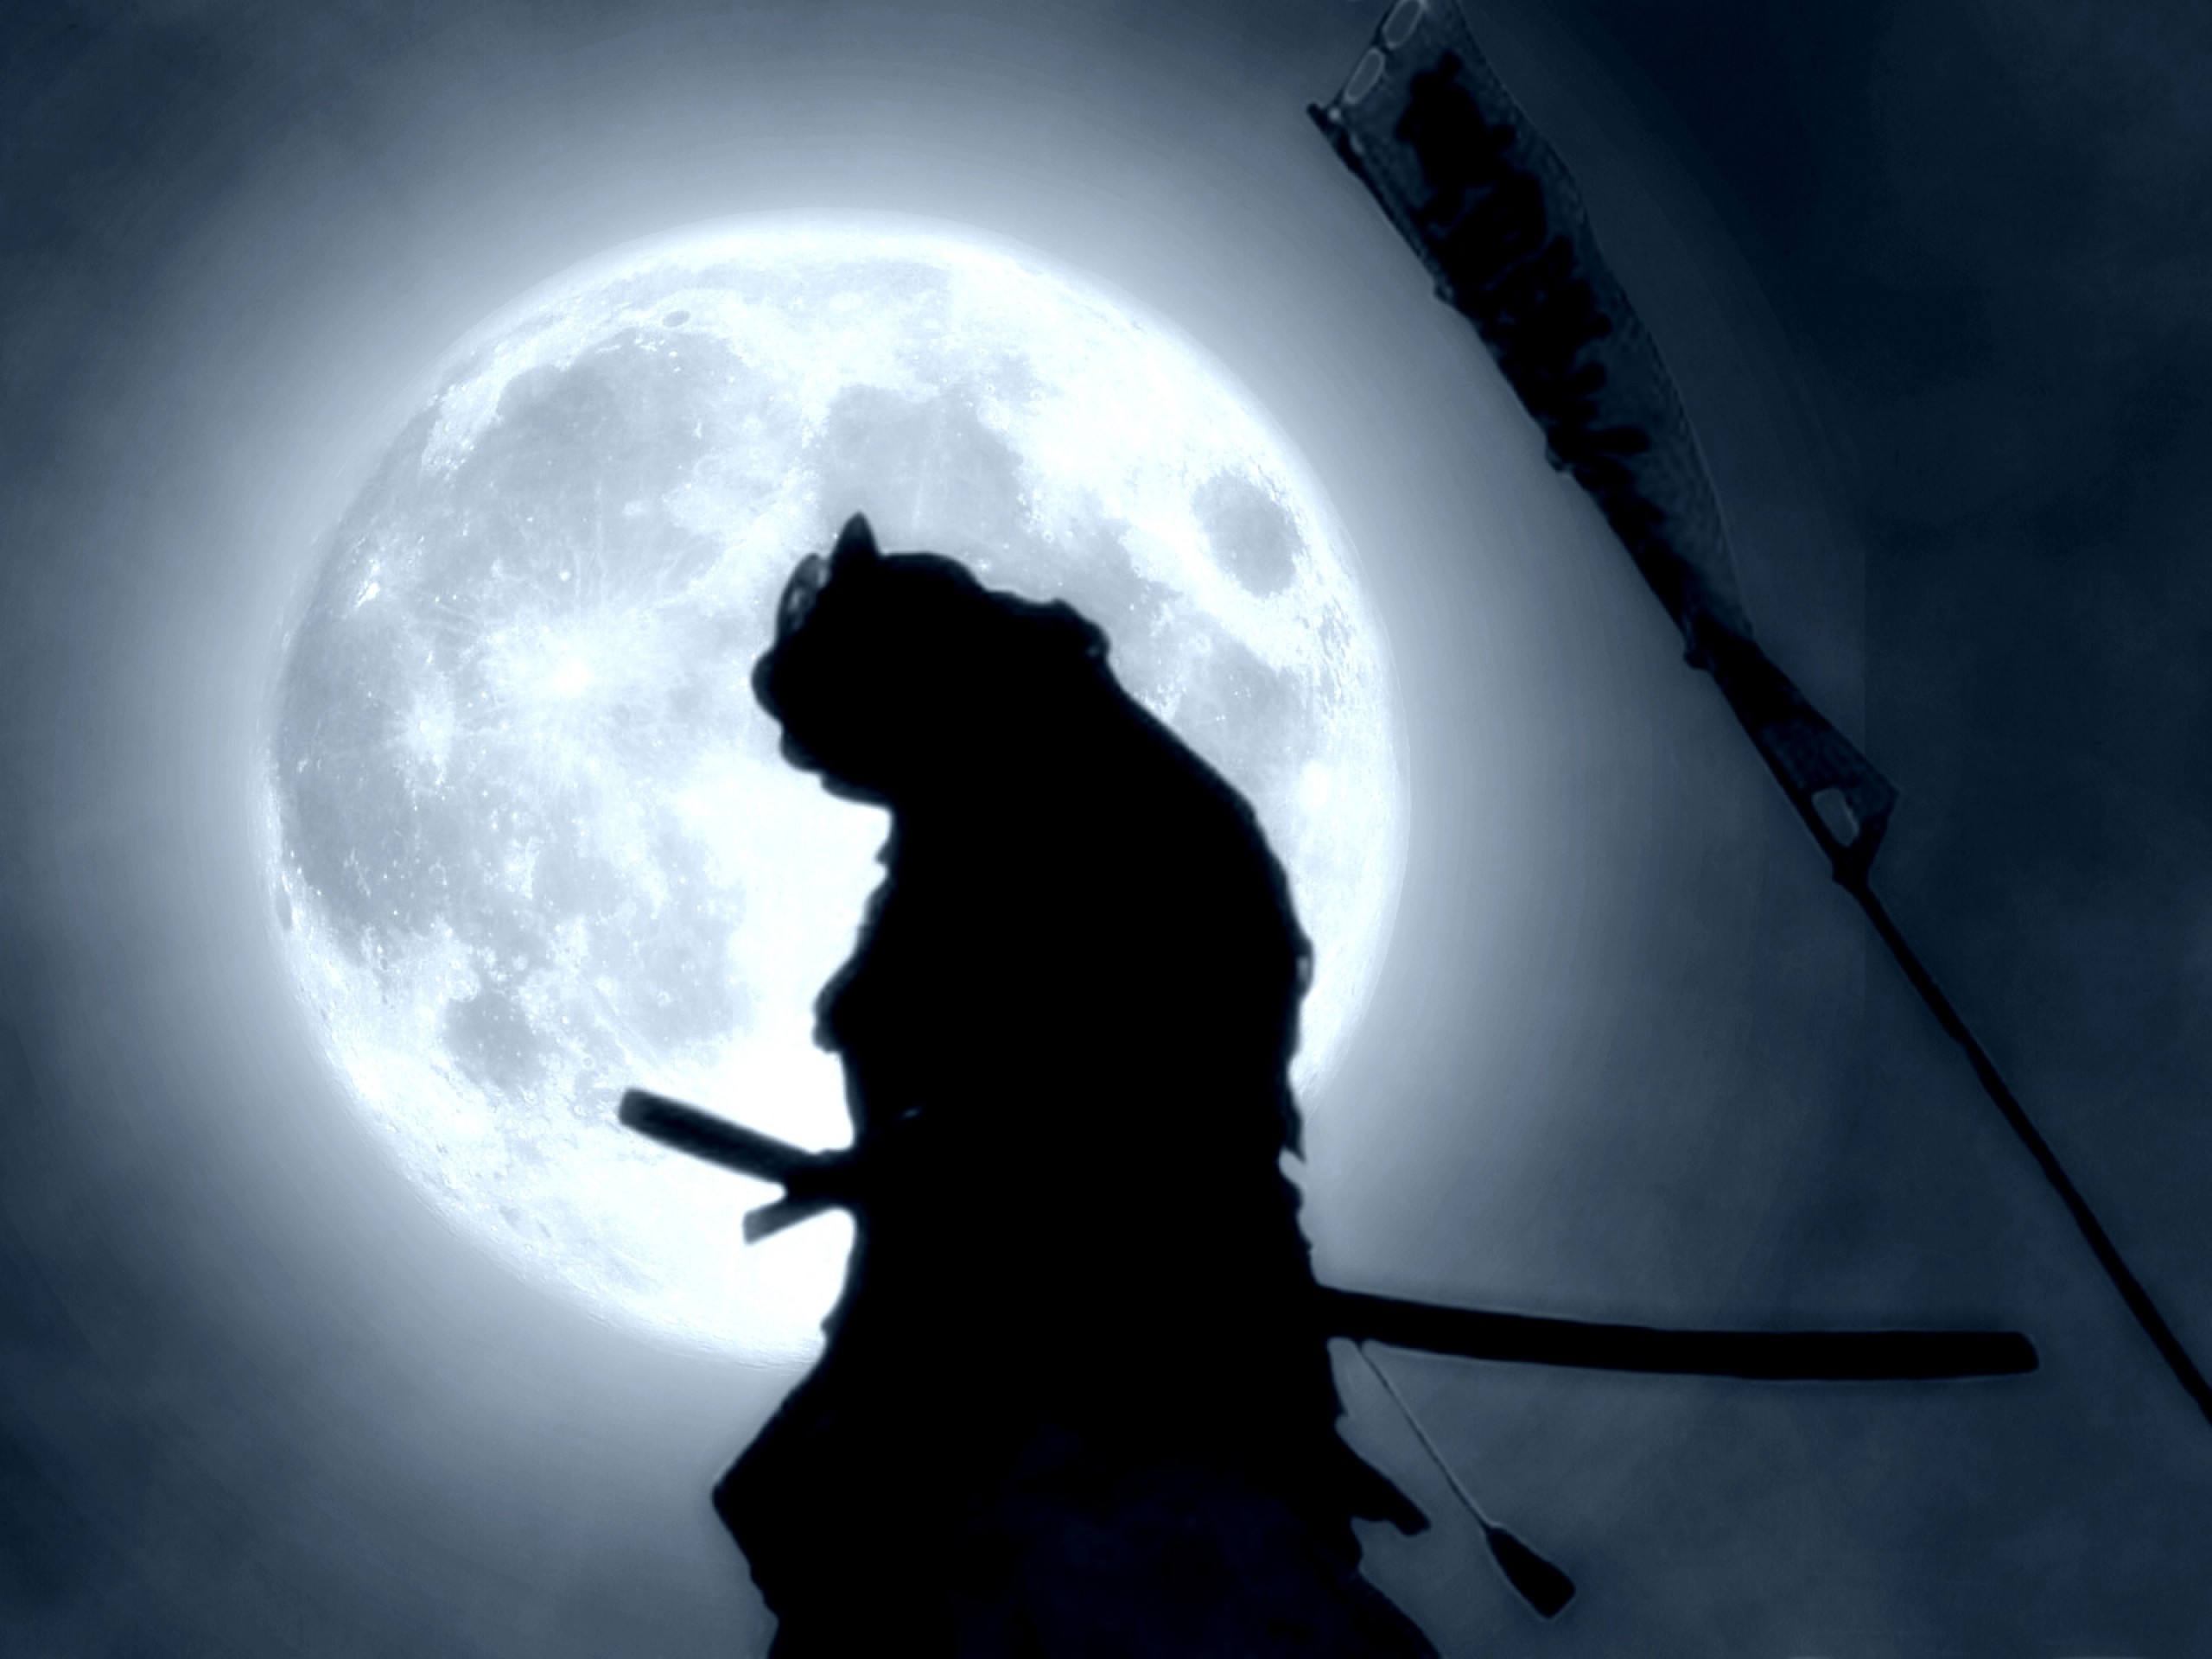 shadow fight 2 pictures ninja samurai